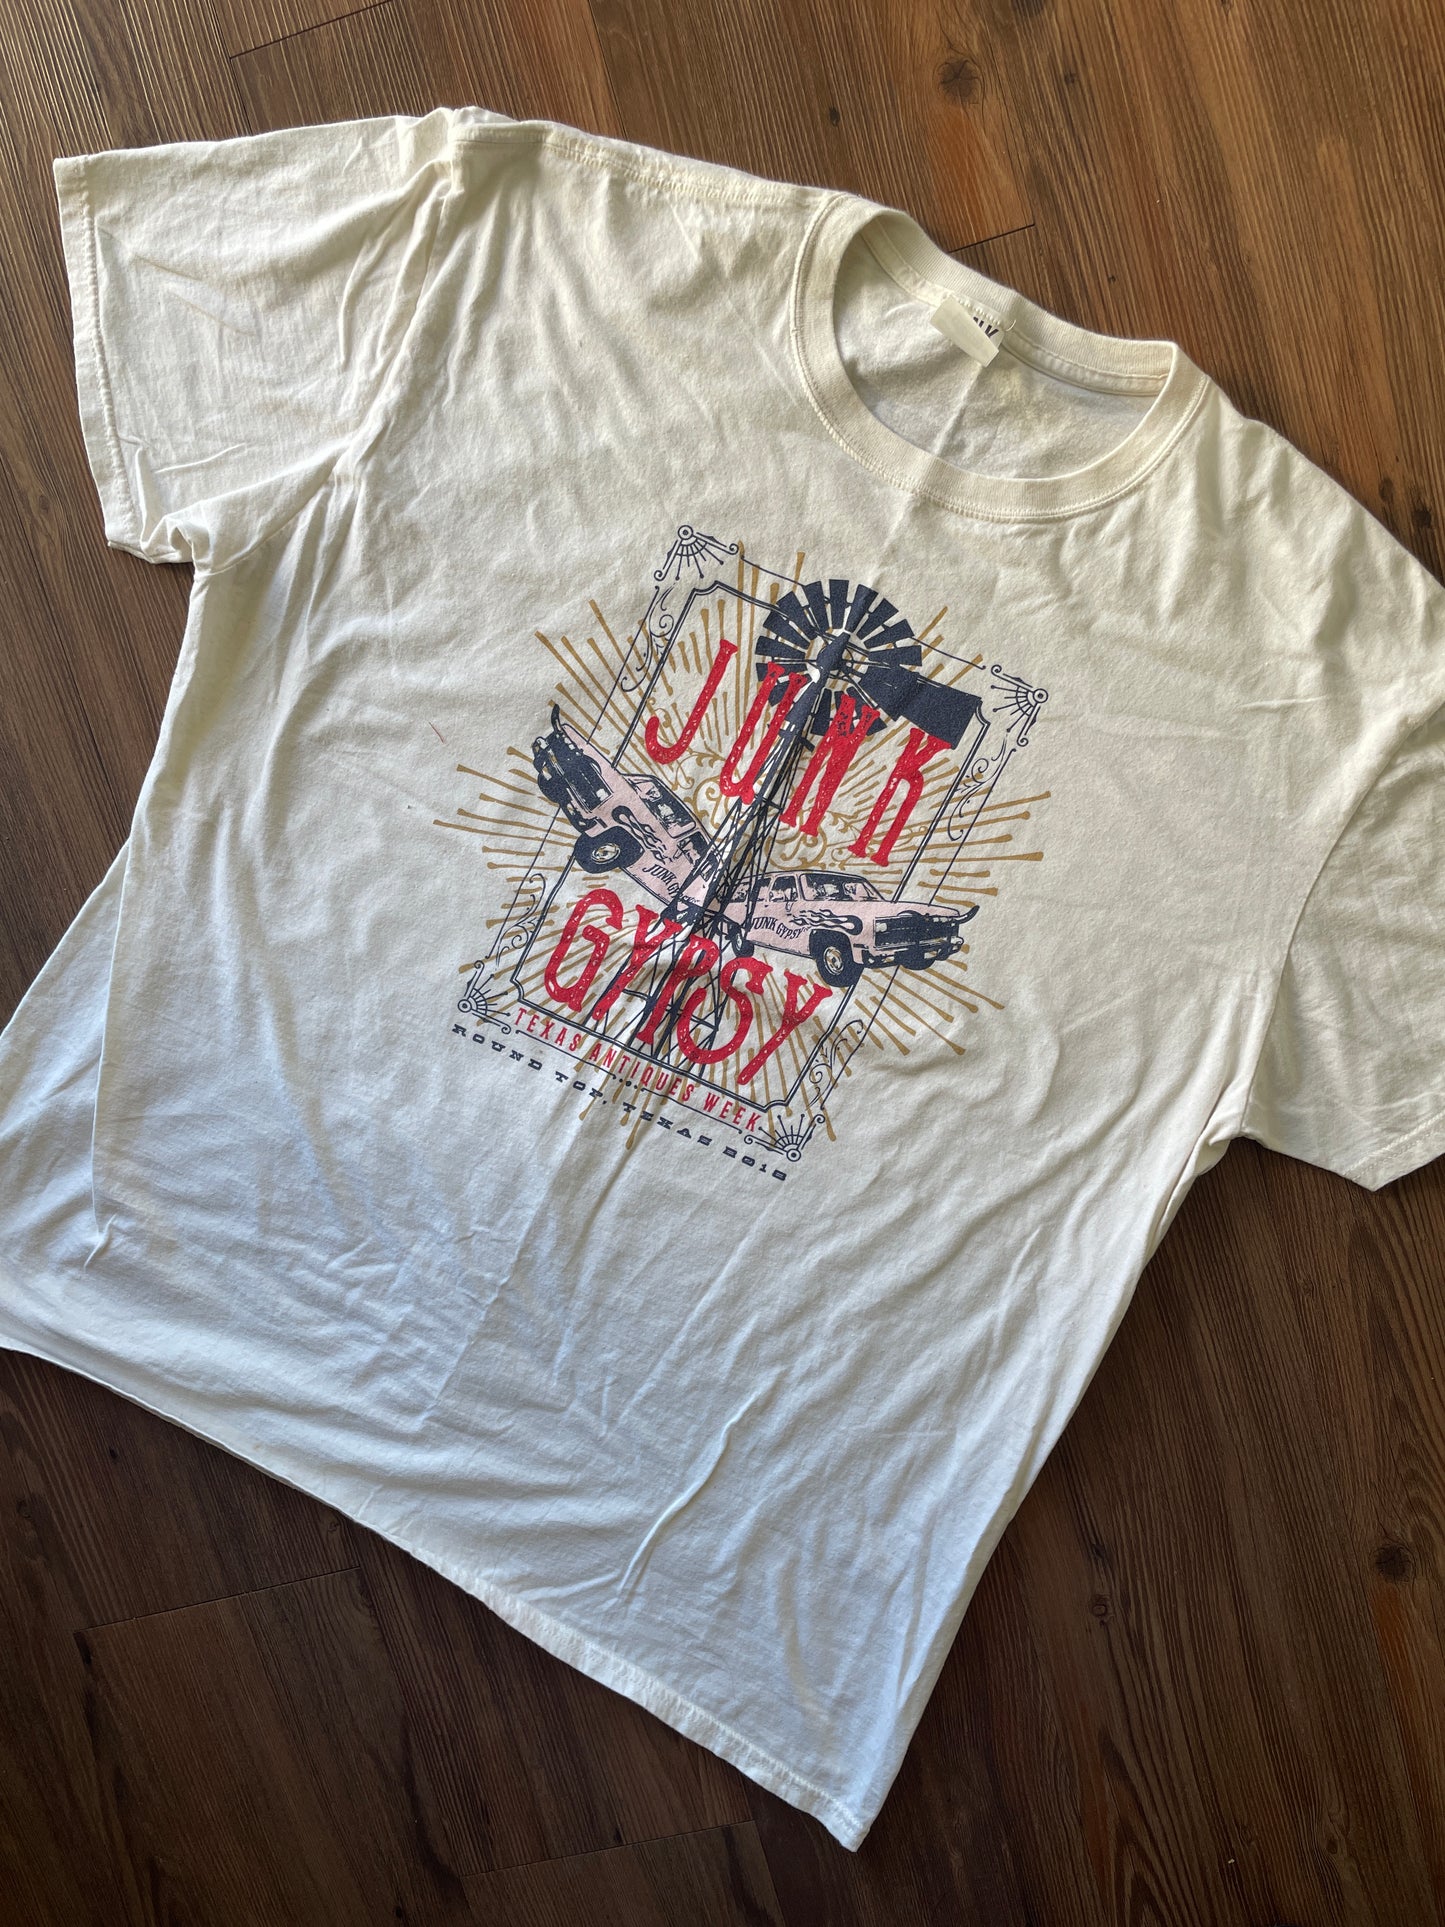 XXL Men's Junk Gypsy White Short Sleeve T-Shirt | READY TO TIE DYE